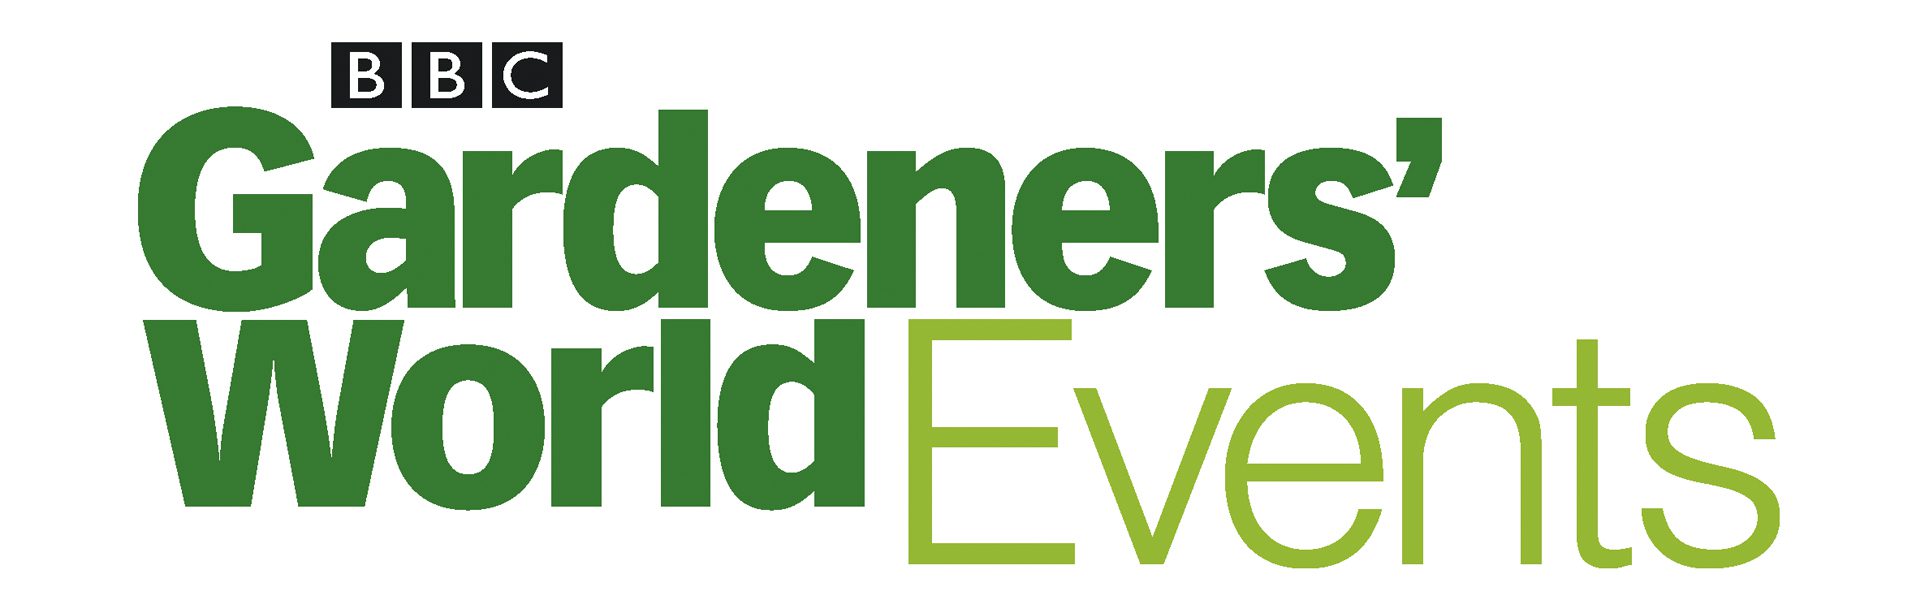 BBC Gardeners' World Events logo